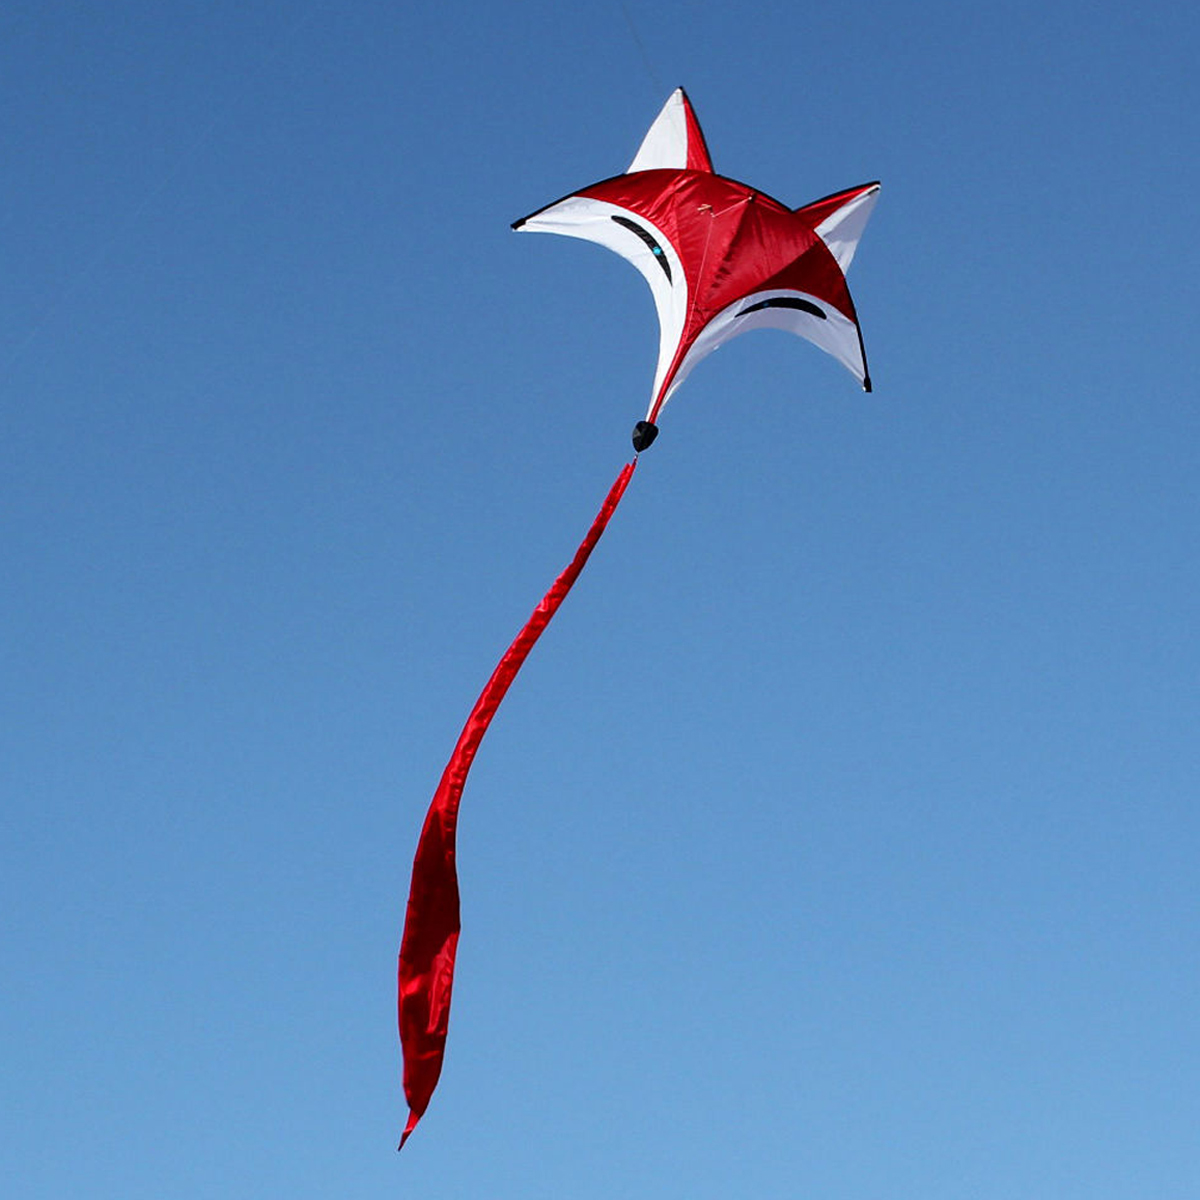 95cmx80cm-Outdoor-Sport-Red-Fox-Flying-Kite-Tail-Toy-Children-Kids-Game-Activity-1337092